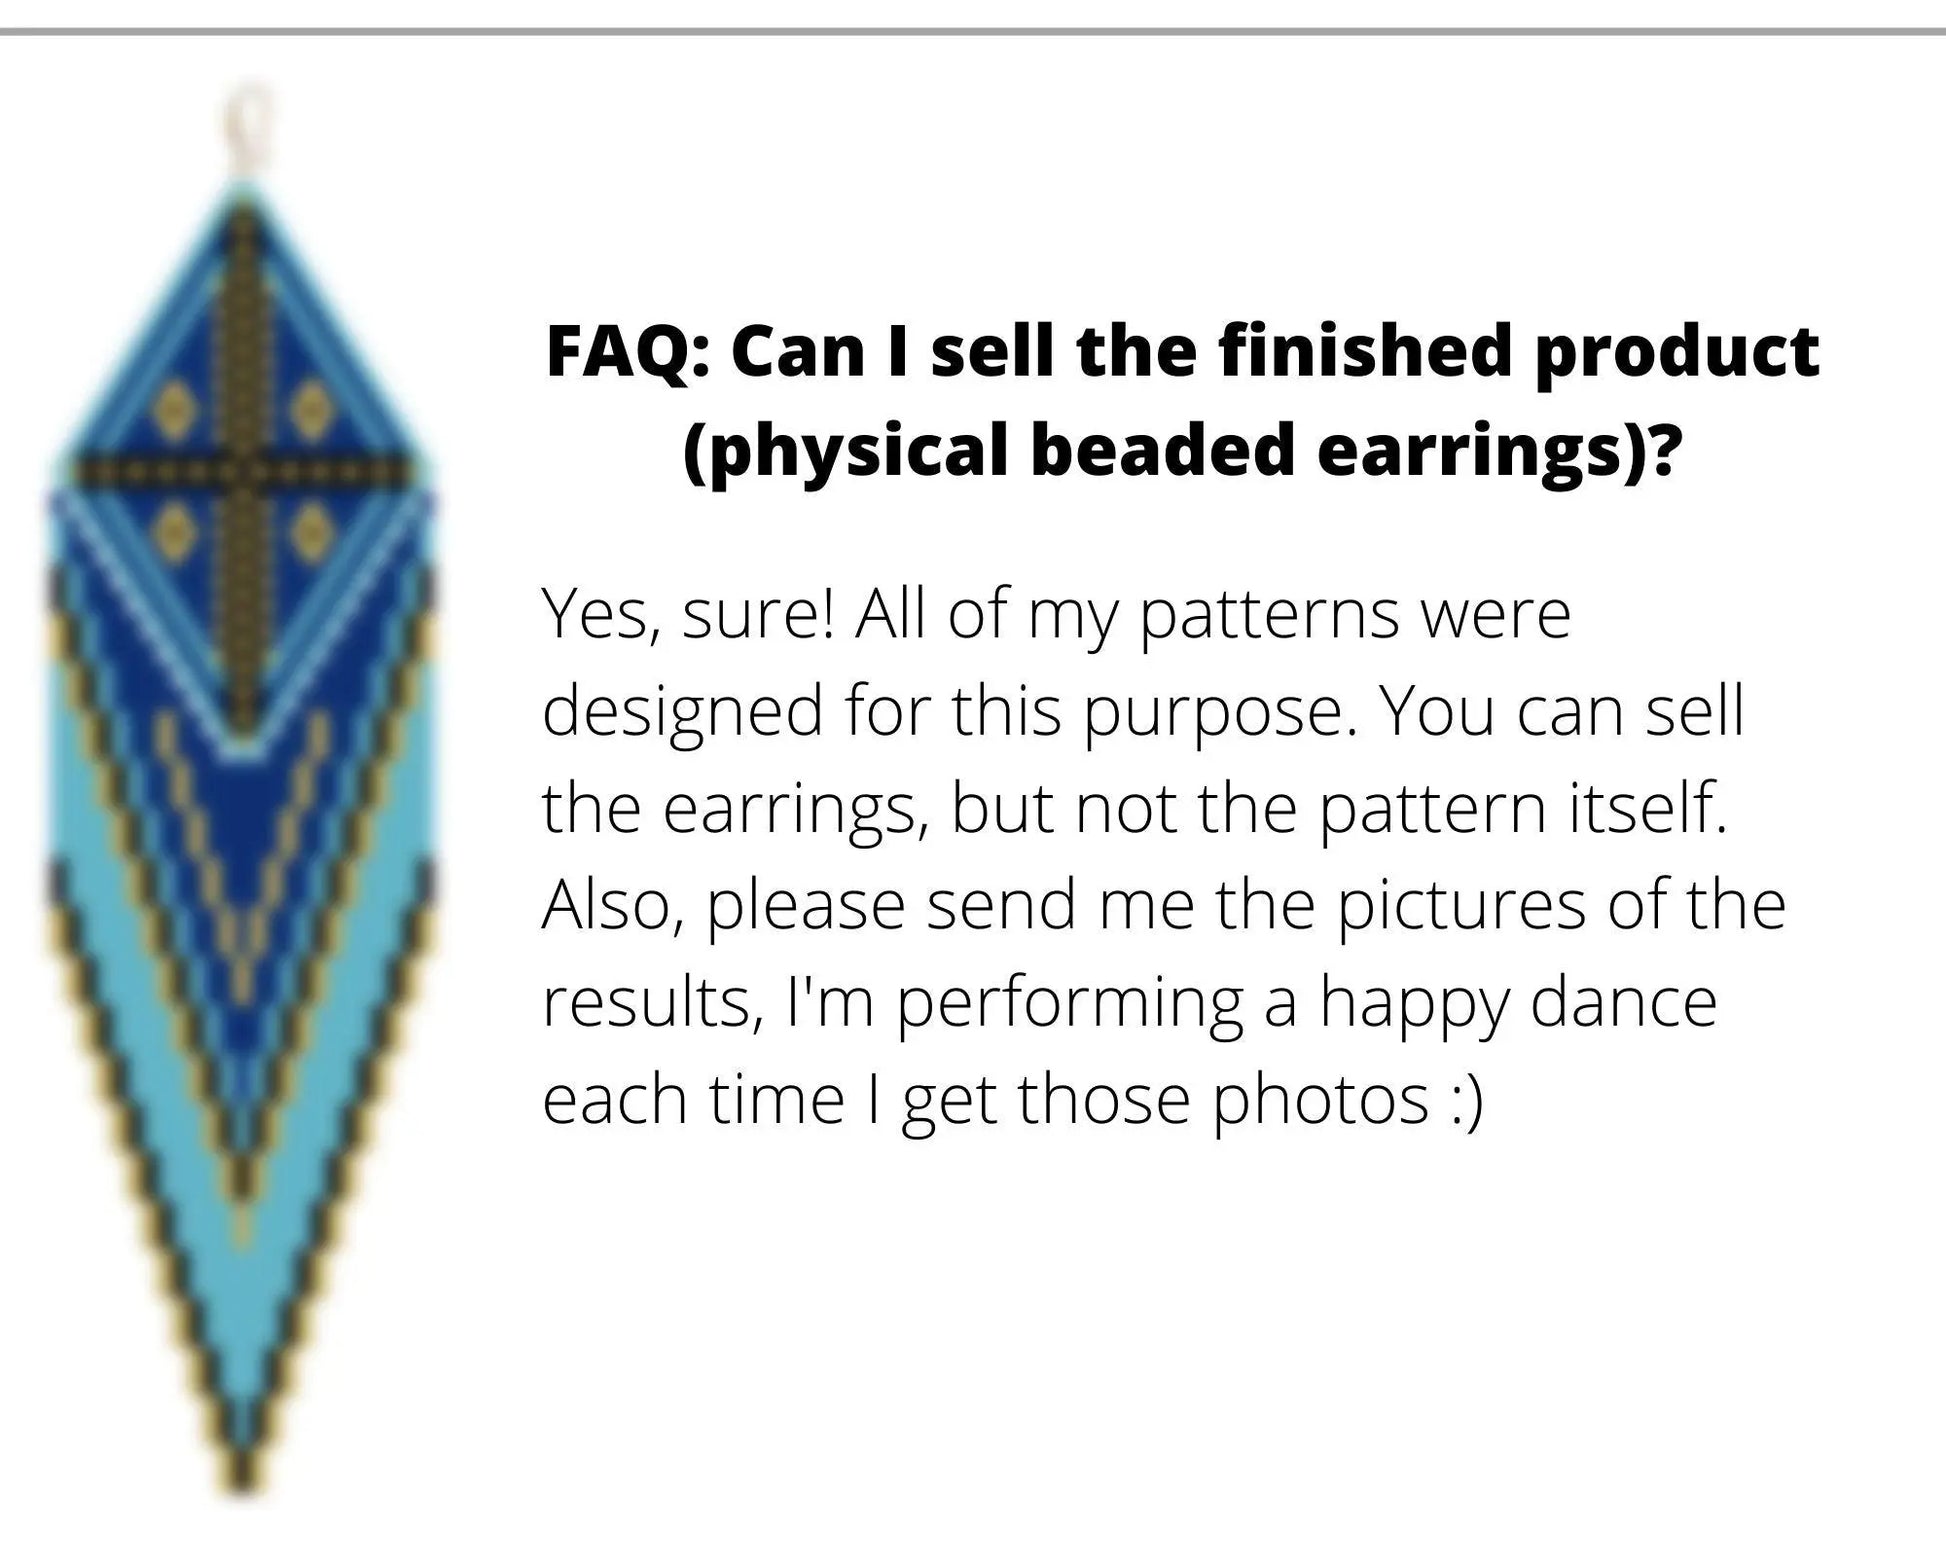 Blue Cross Brick Stitch pattern for fringe beaded earrings with diamond top - NikoBeadsUA